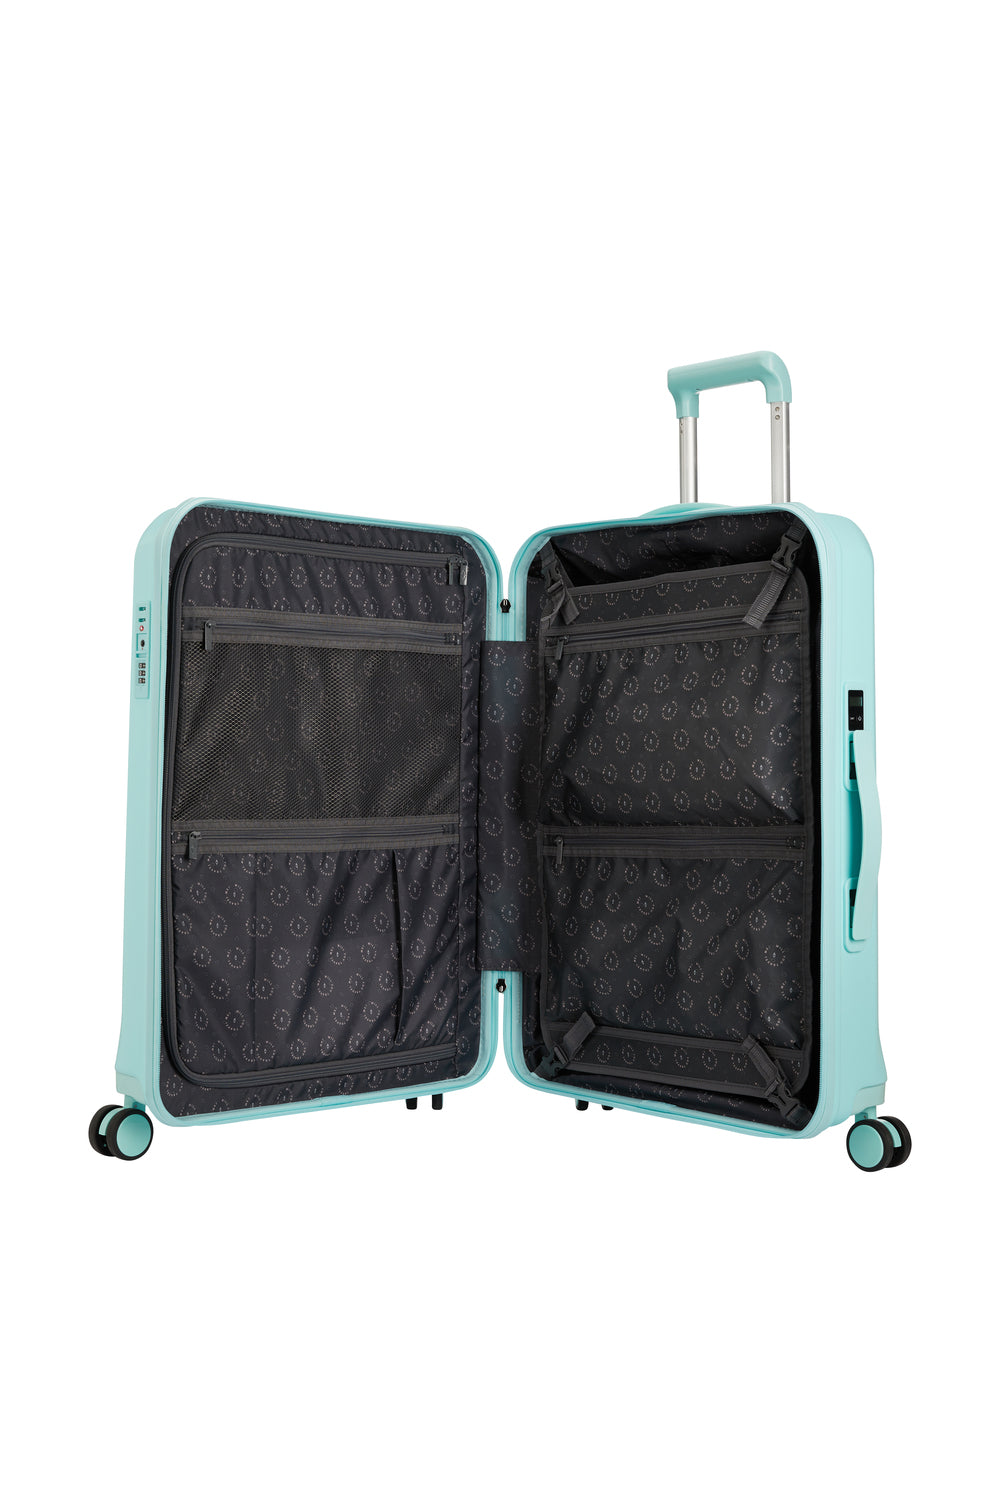 Smart suitcase Large size Wonder Ocean HAVE A REST